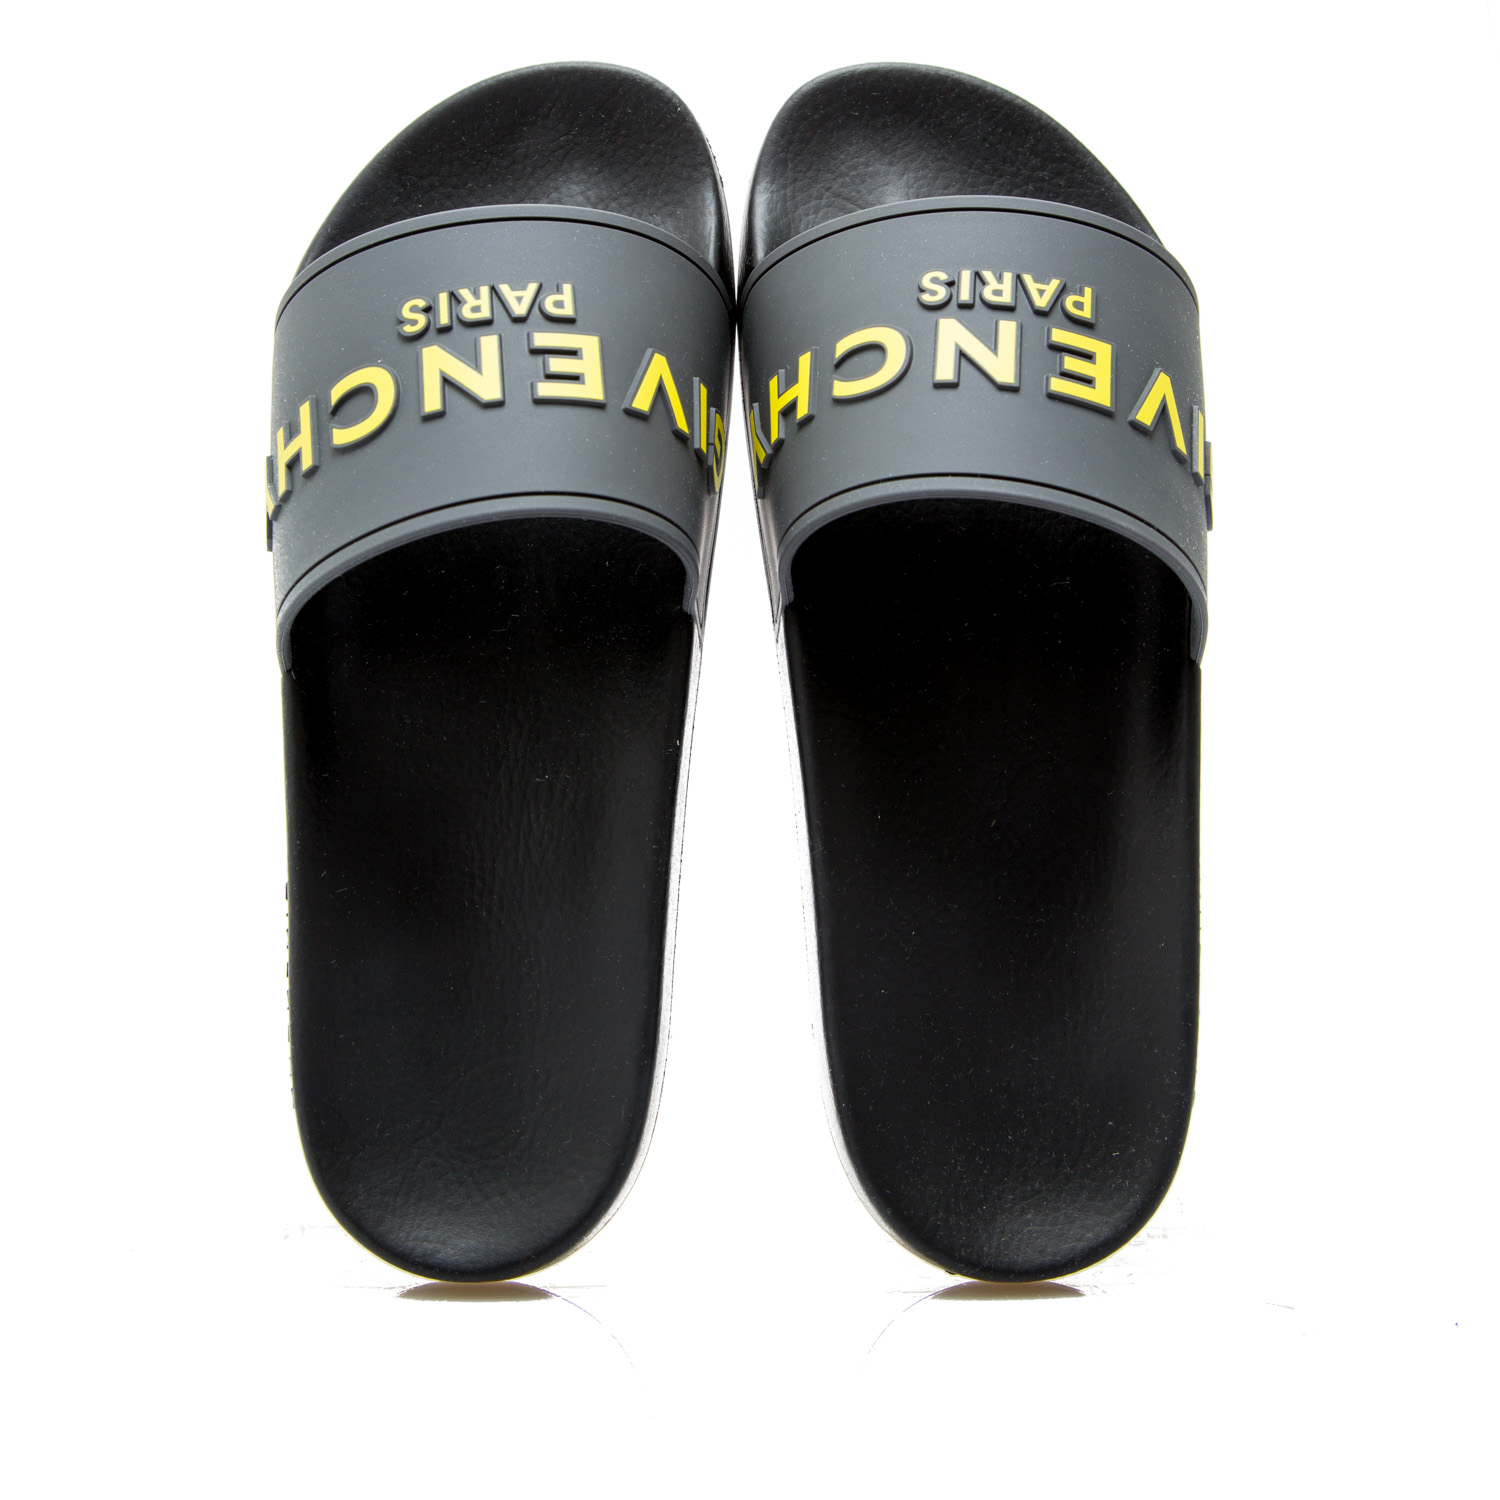 Givenchy Slide Sandal | Credomen